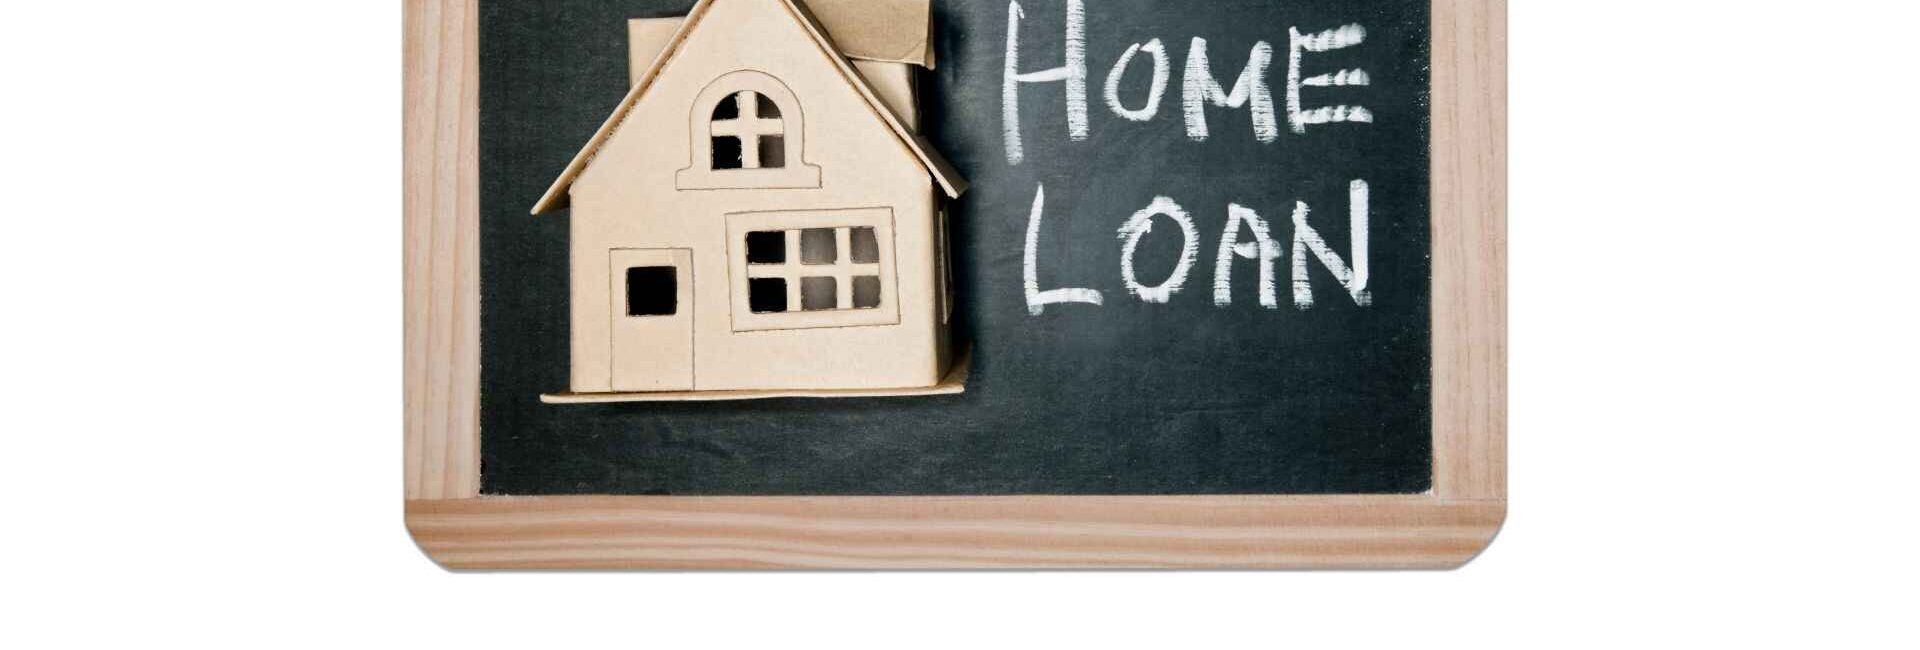 Trustlenders Capital Pvt Ltd- Home Loan Assistance Professionals in Noida